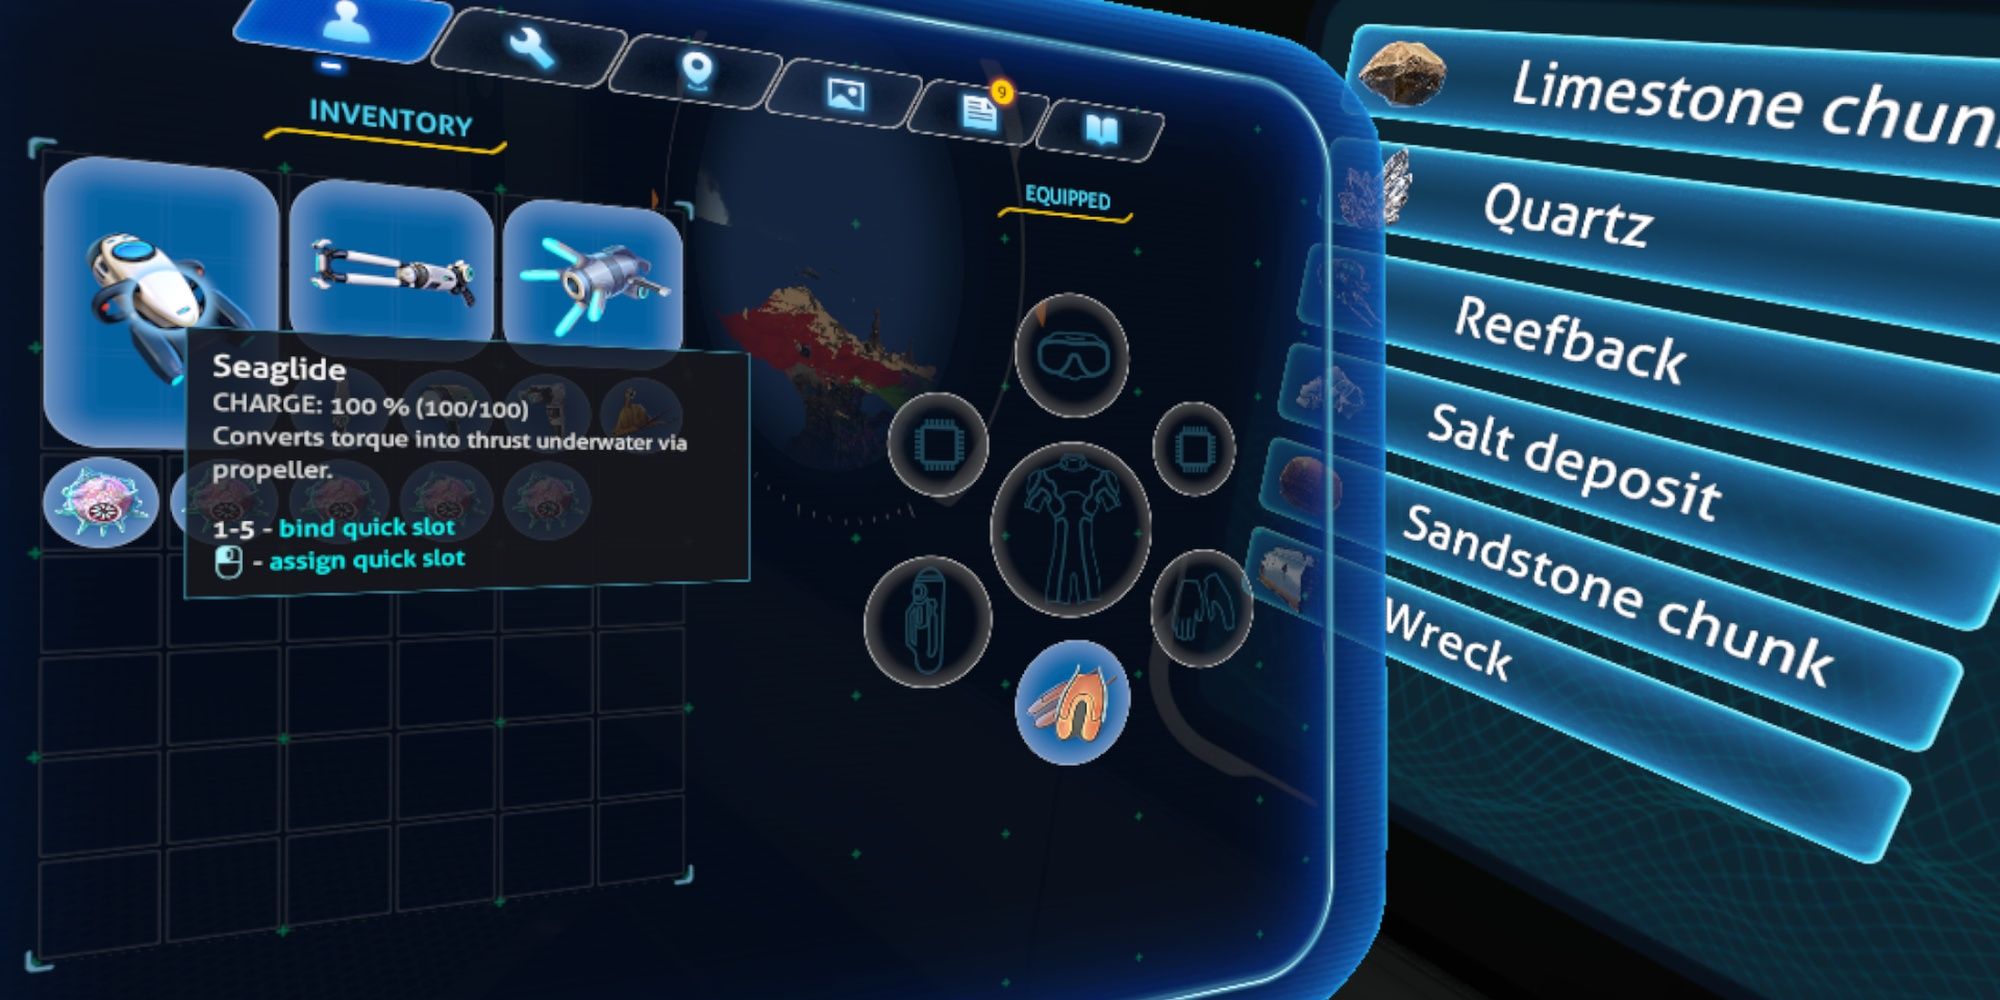 Subnautica VR玩法攻略：在VR中玩的提示和技巧